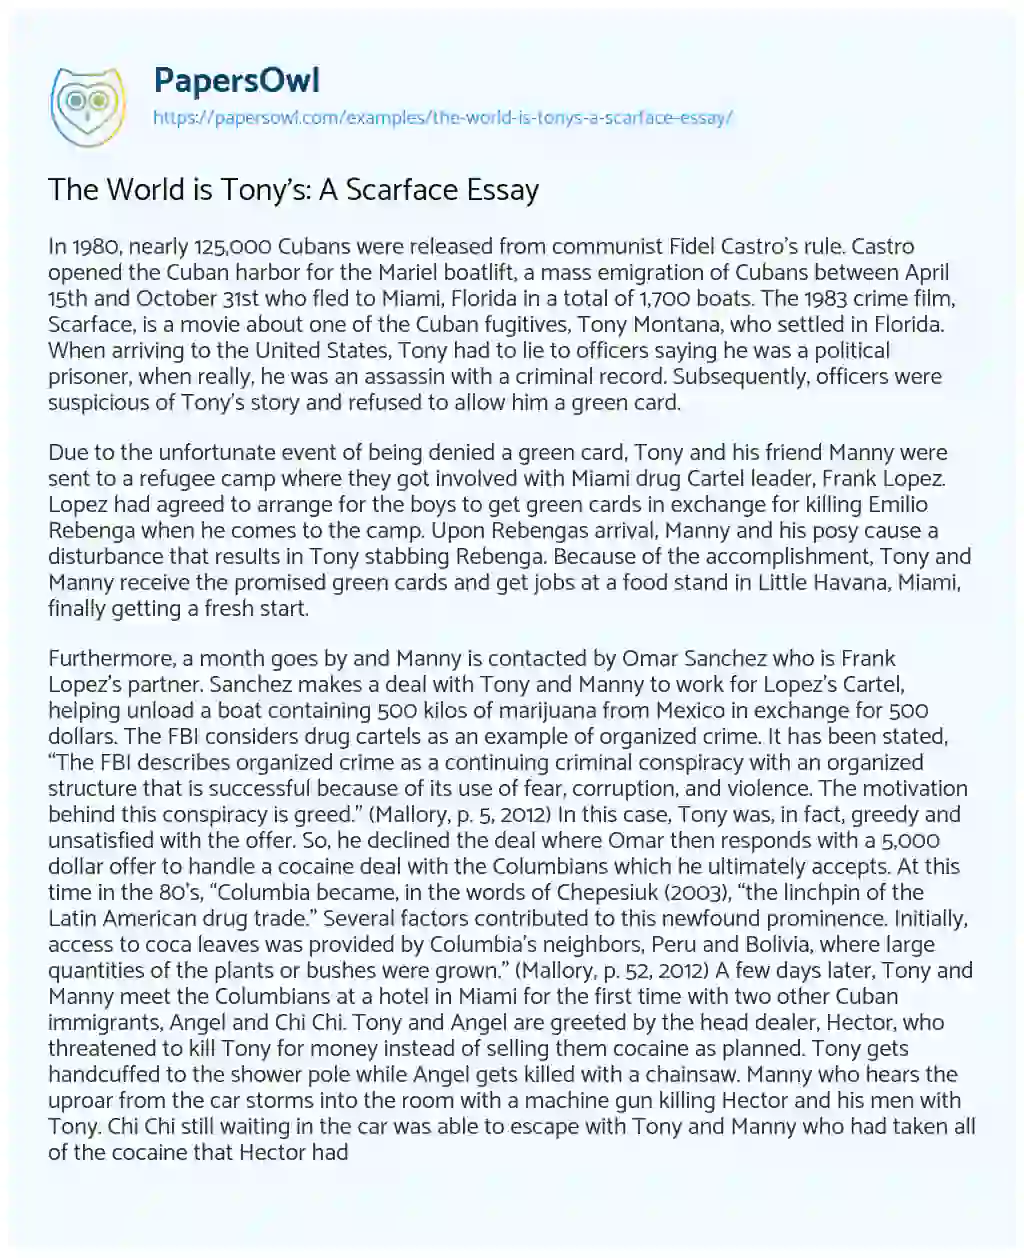 The World is Tony’s: a Scarface Essay essay